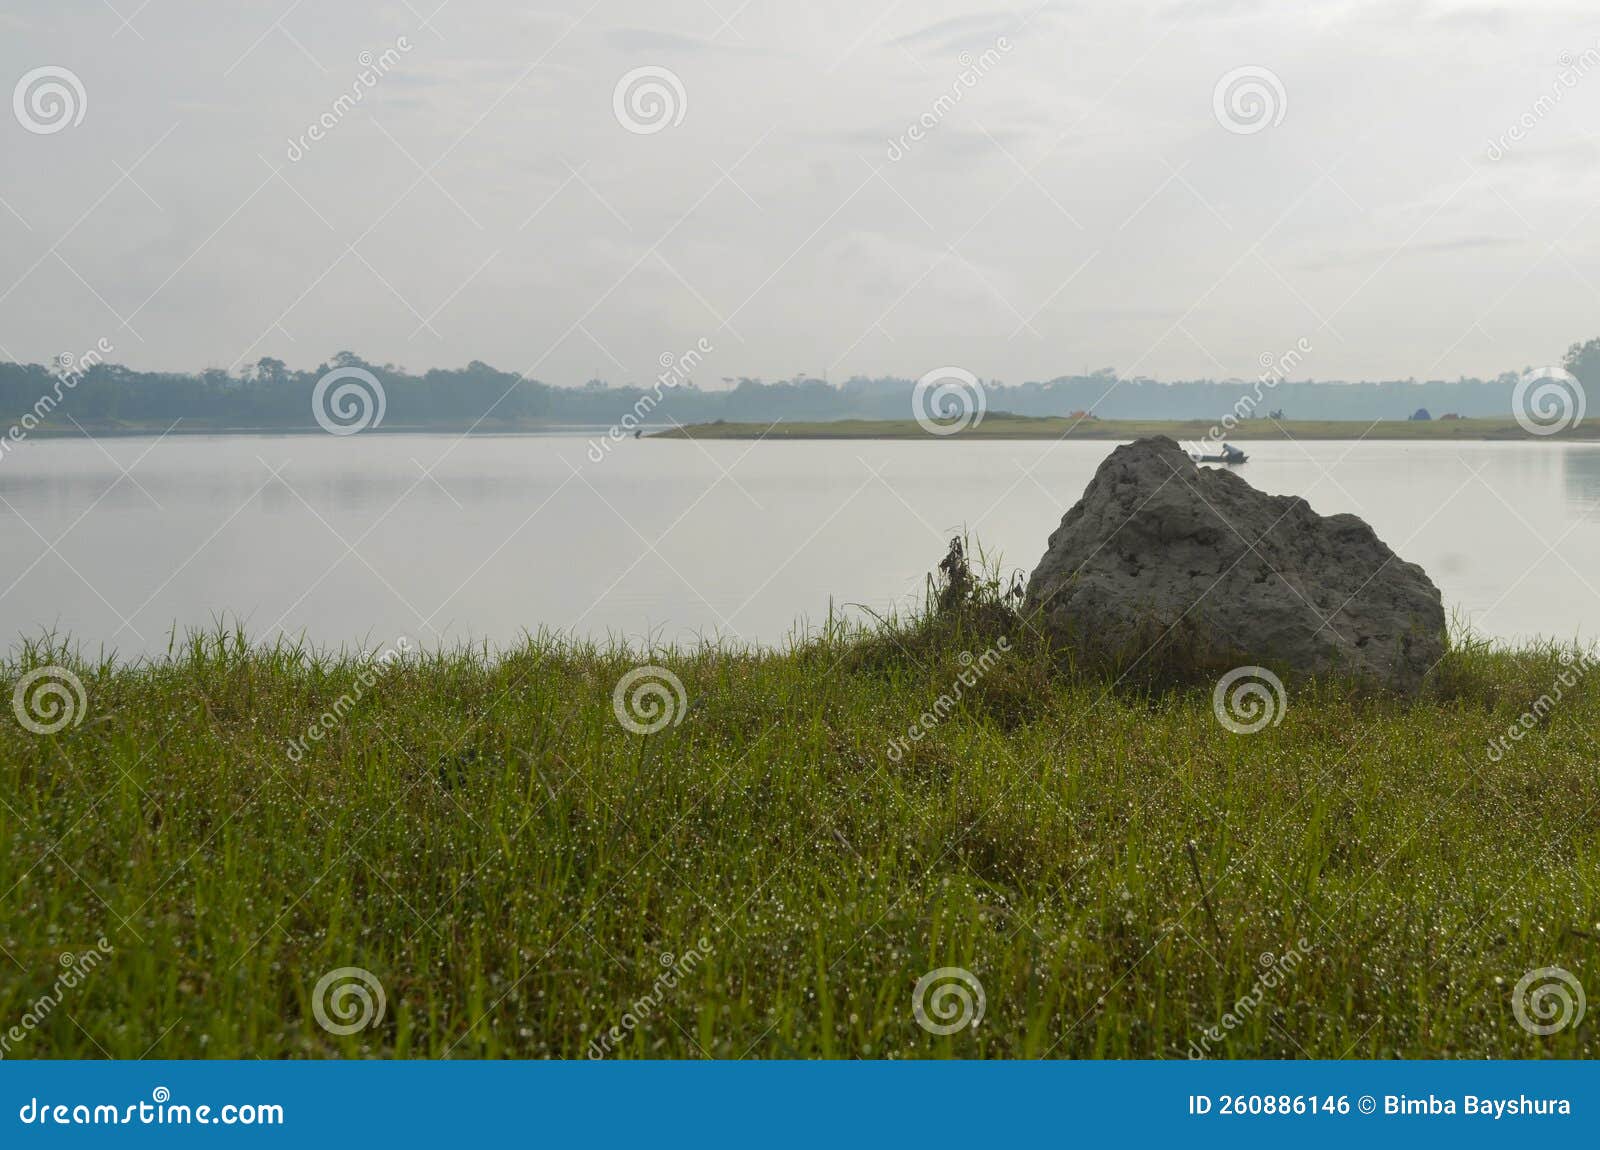 front view of reservoir karangkates malang indonesia between mountains